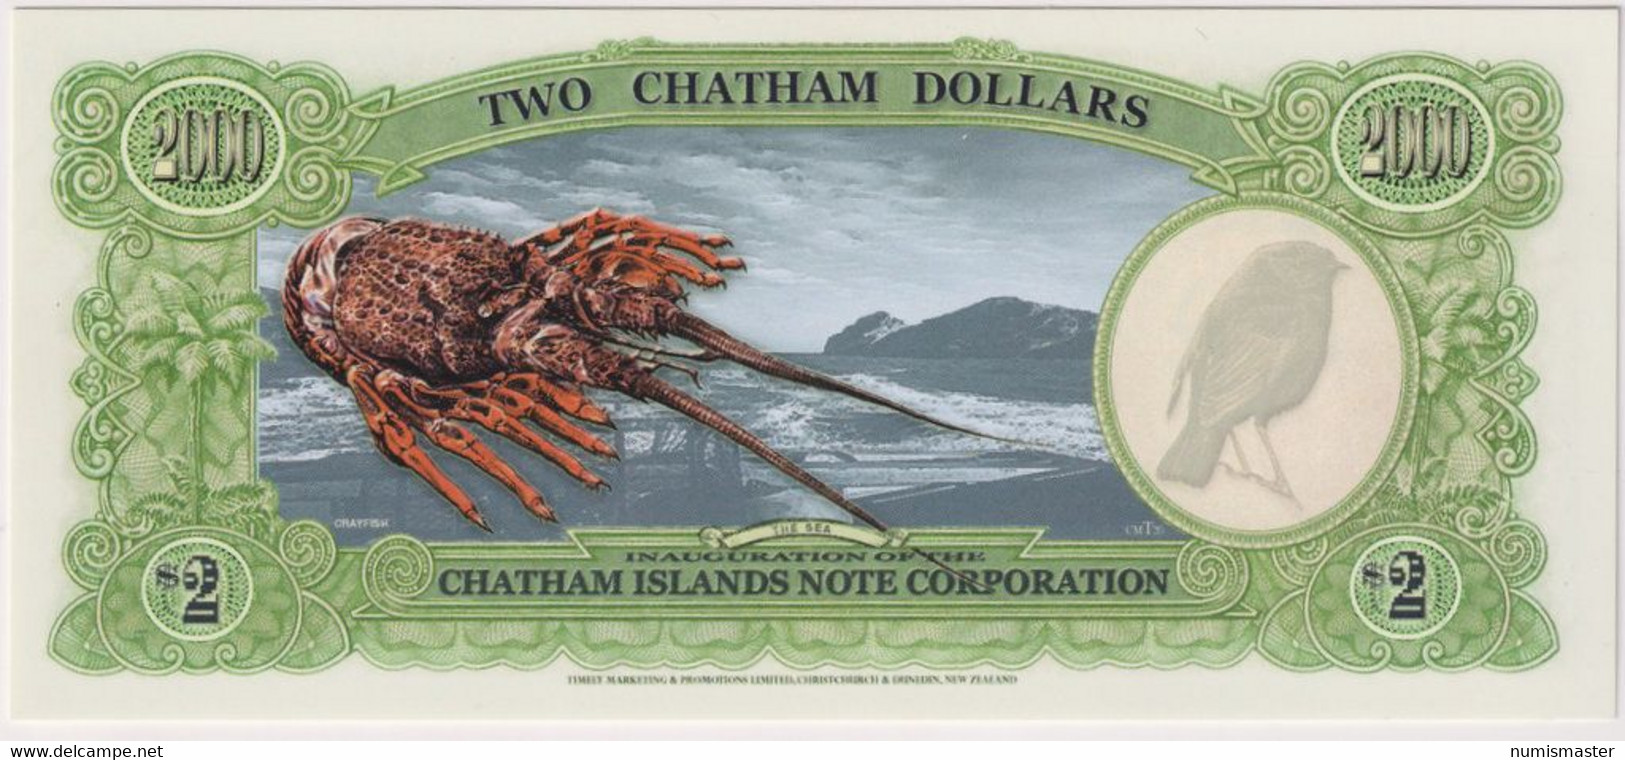 NEW ZEALAND , CHATAM ISLANDS, 2 DOLLARS COMMEMORATIVE MILENIUM ISSUE , UNC POLYMER - Neuseeland